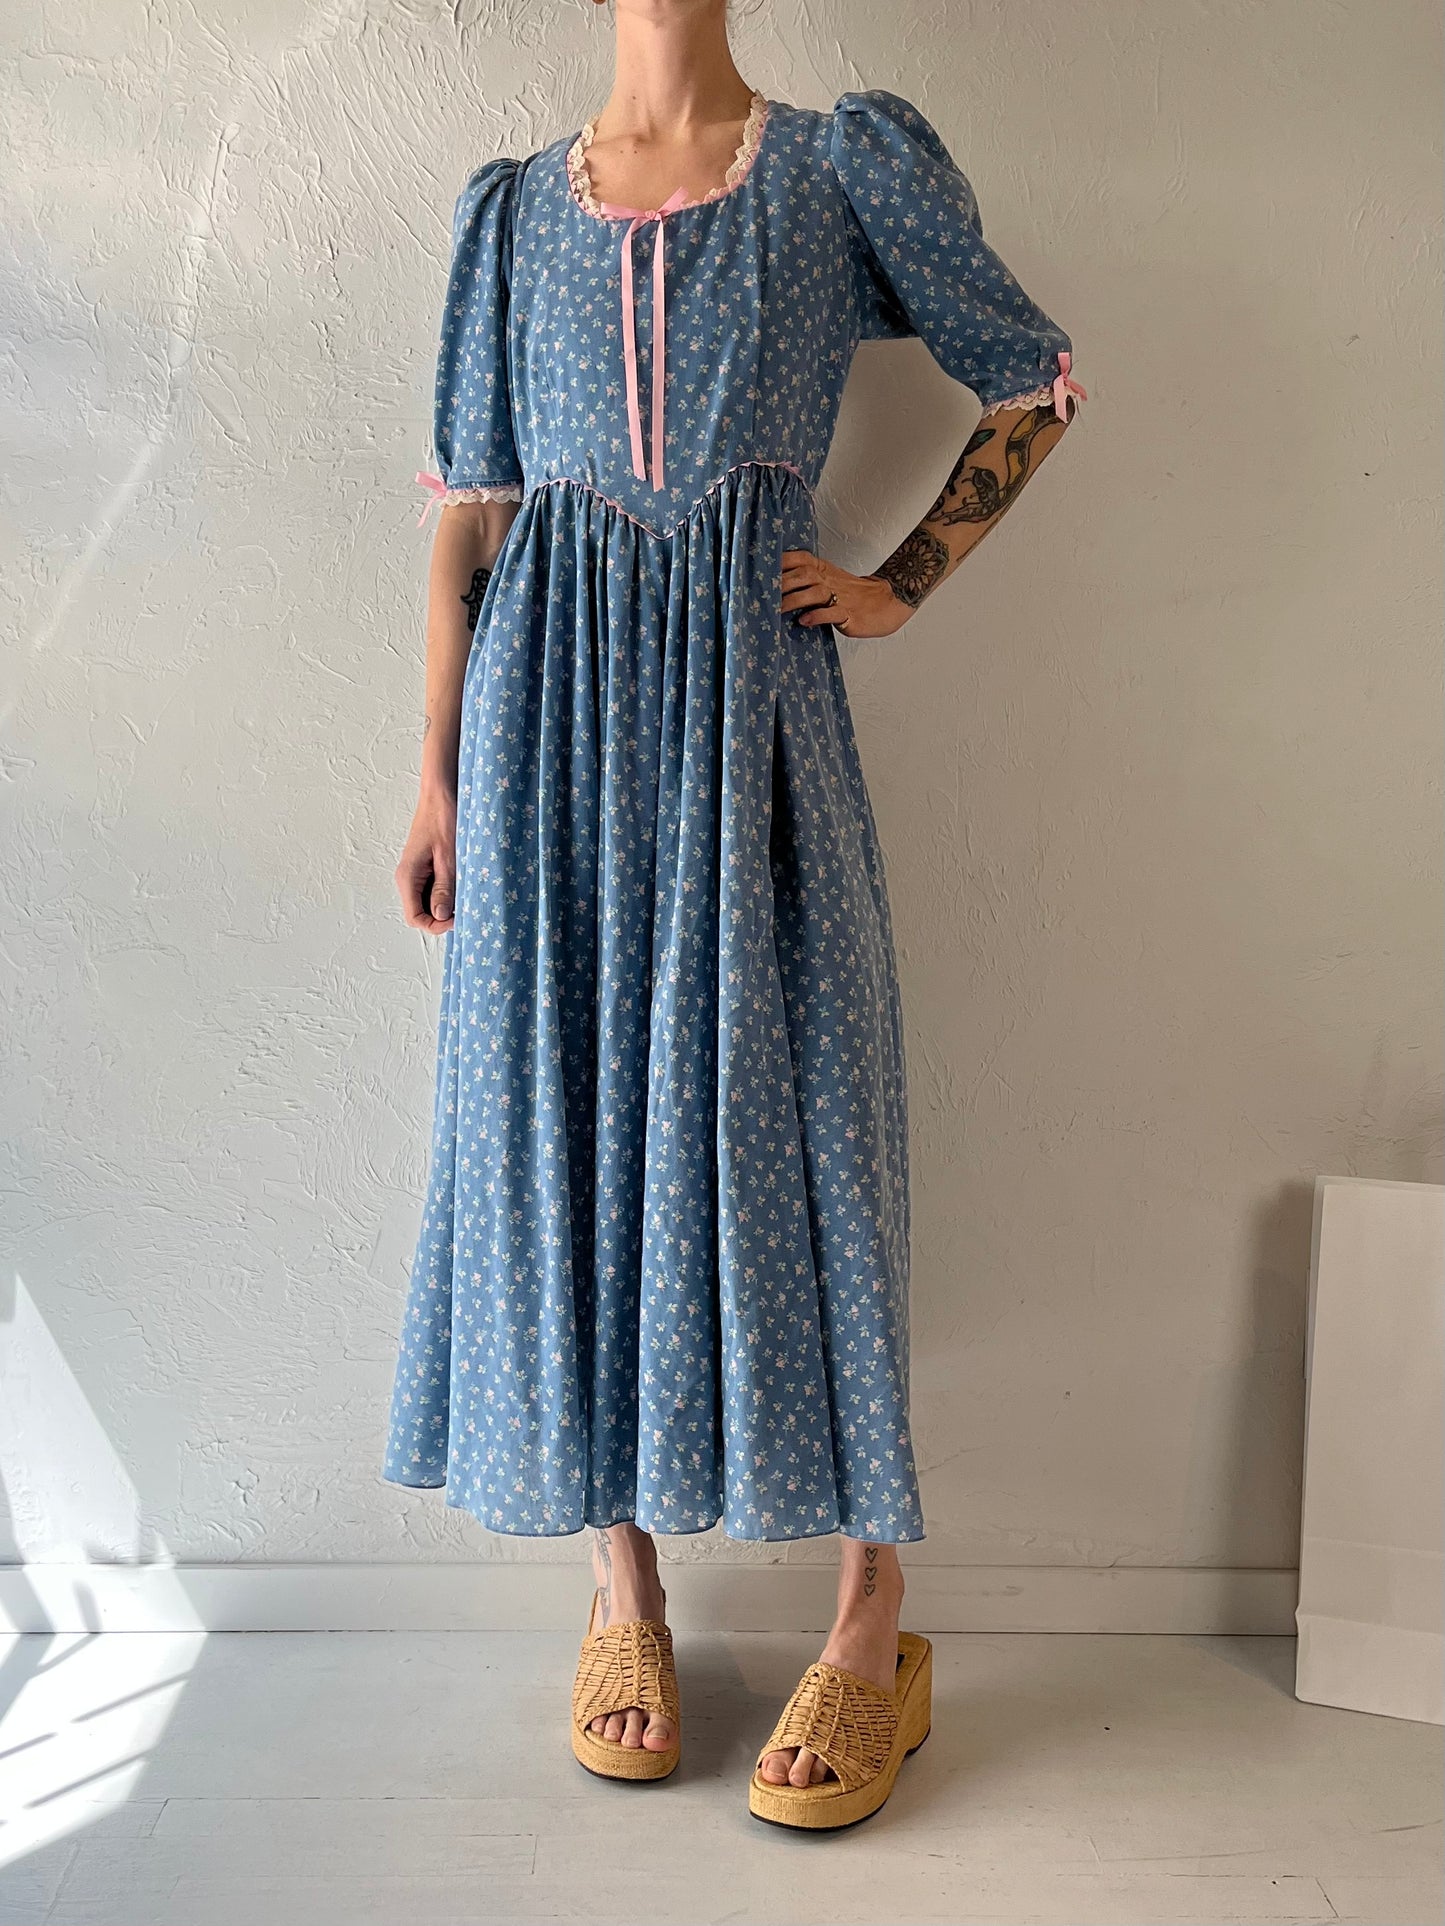 Vintage Handmade Blue Floral Dress / Medium